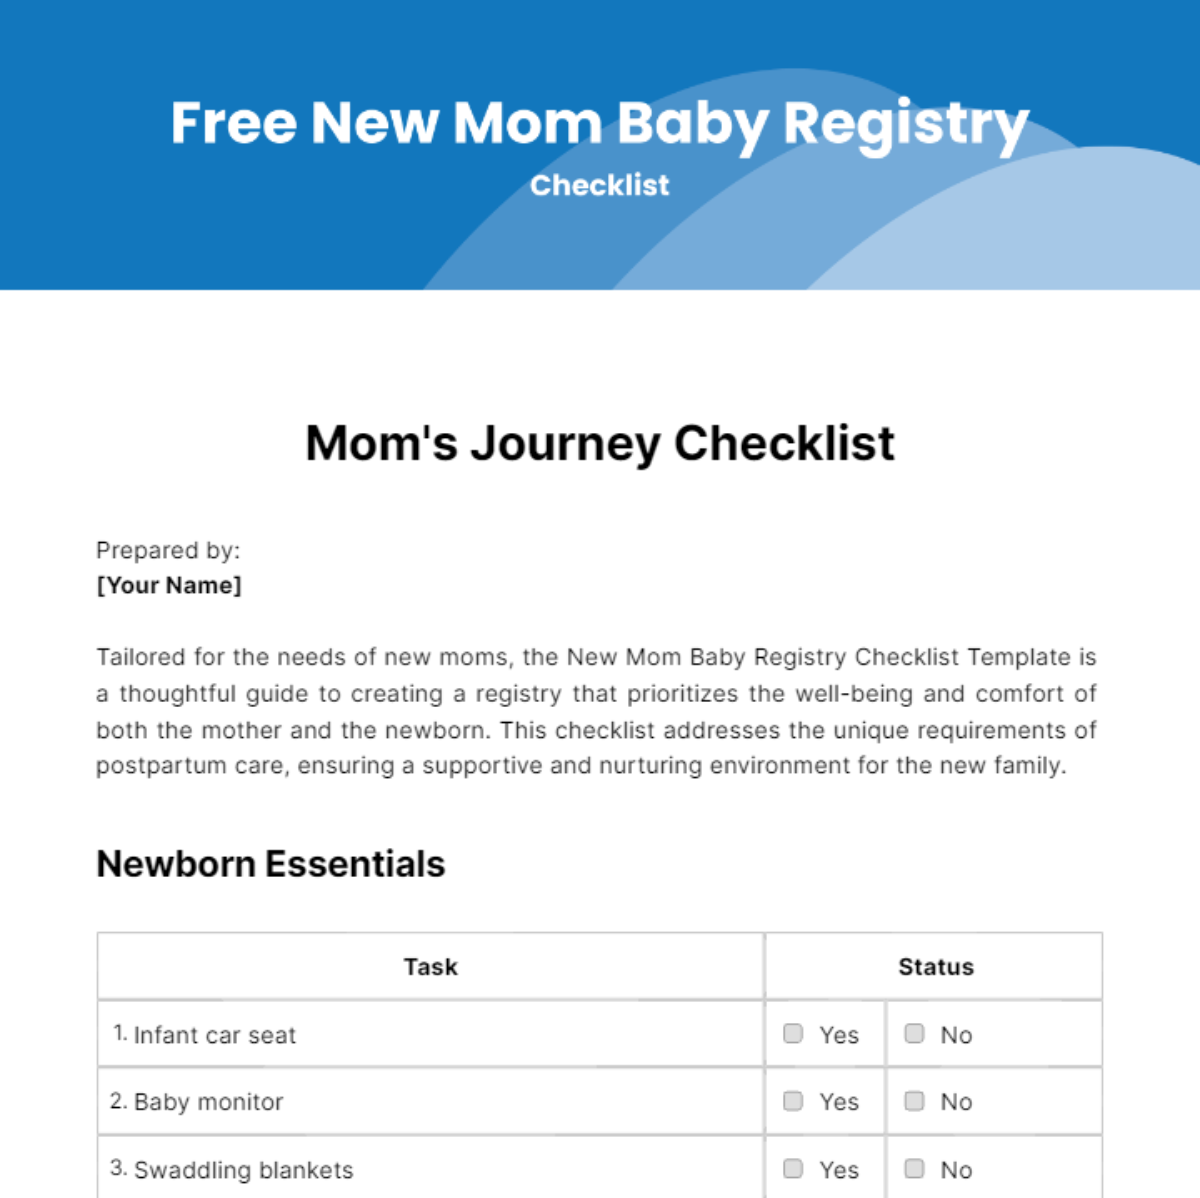 Free New Mom Baby Registry Checklist Template